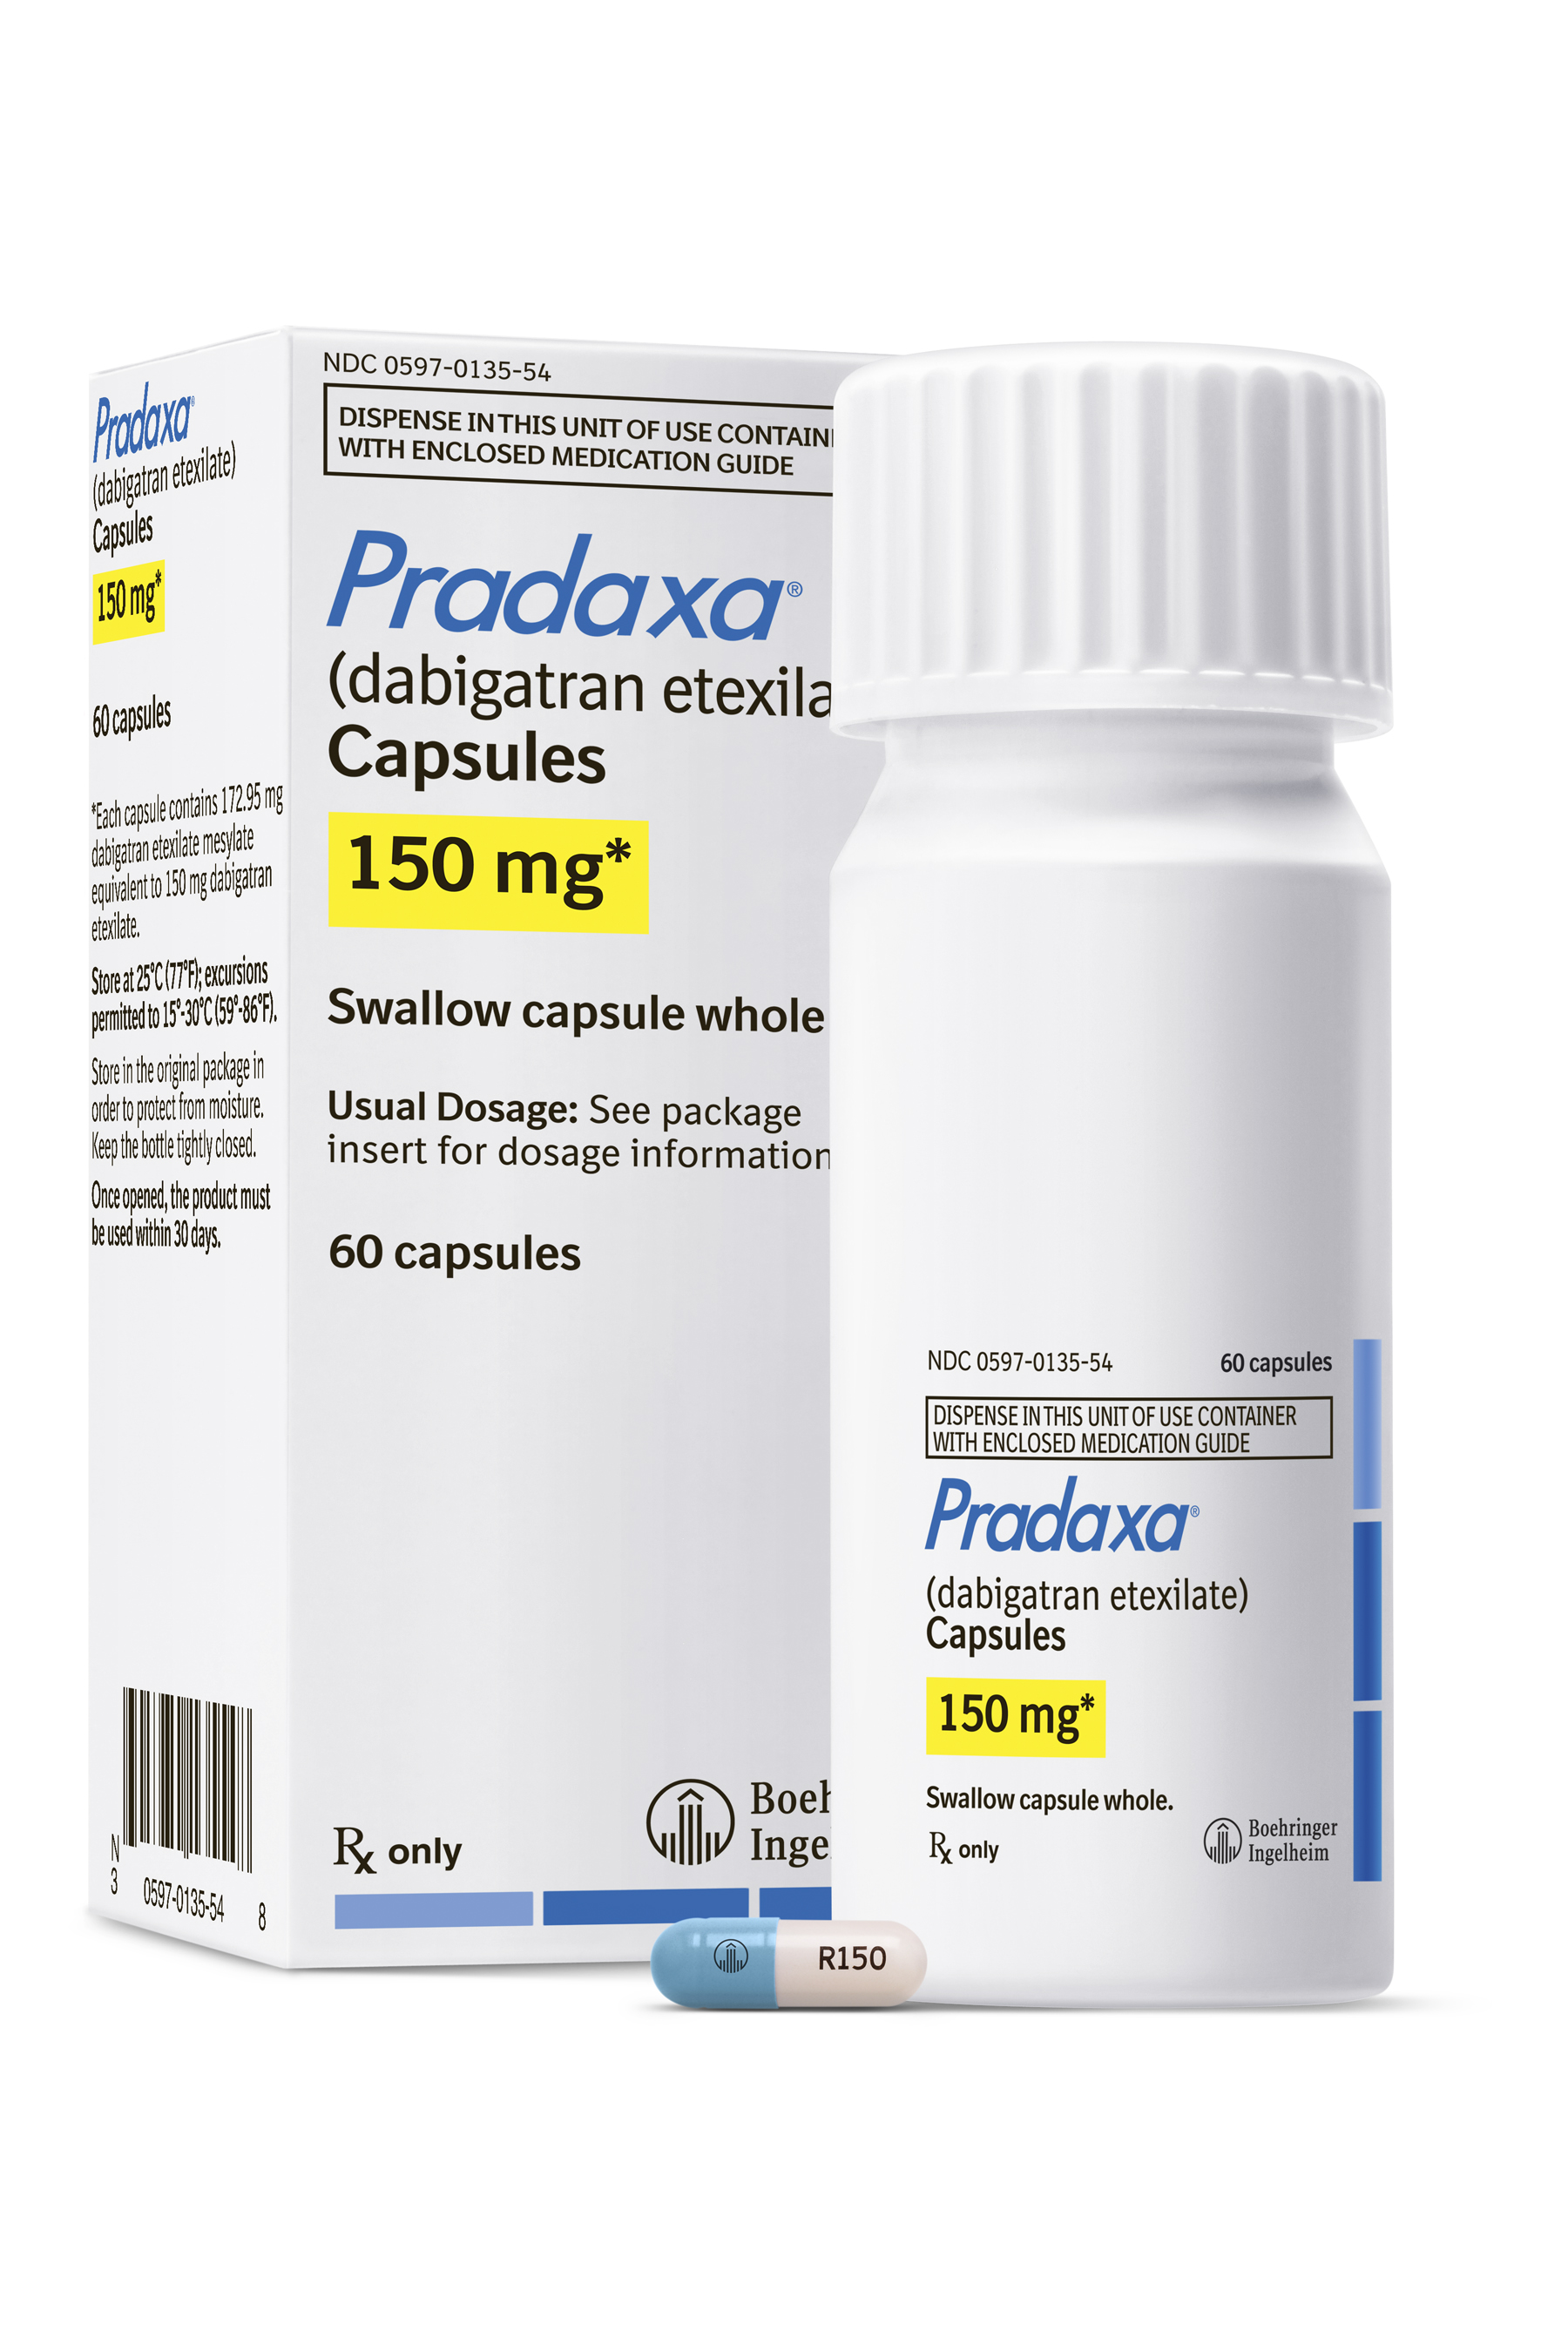 Pradaxa Bleeding Risk Analysis Hidden from FDA